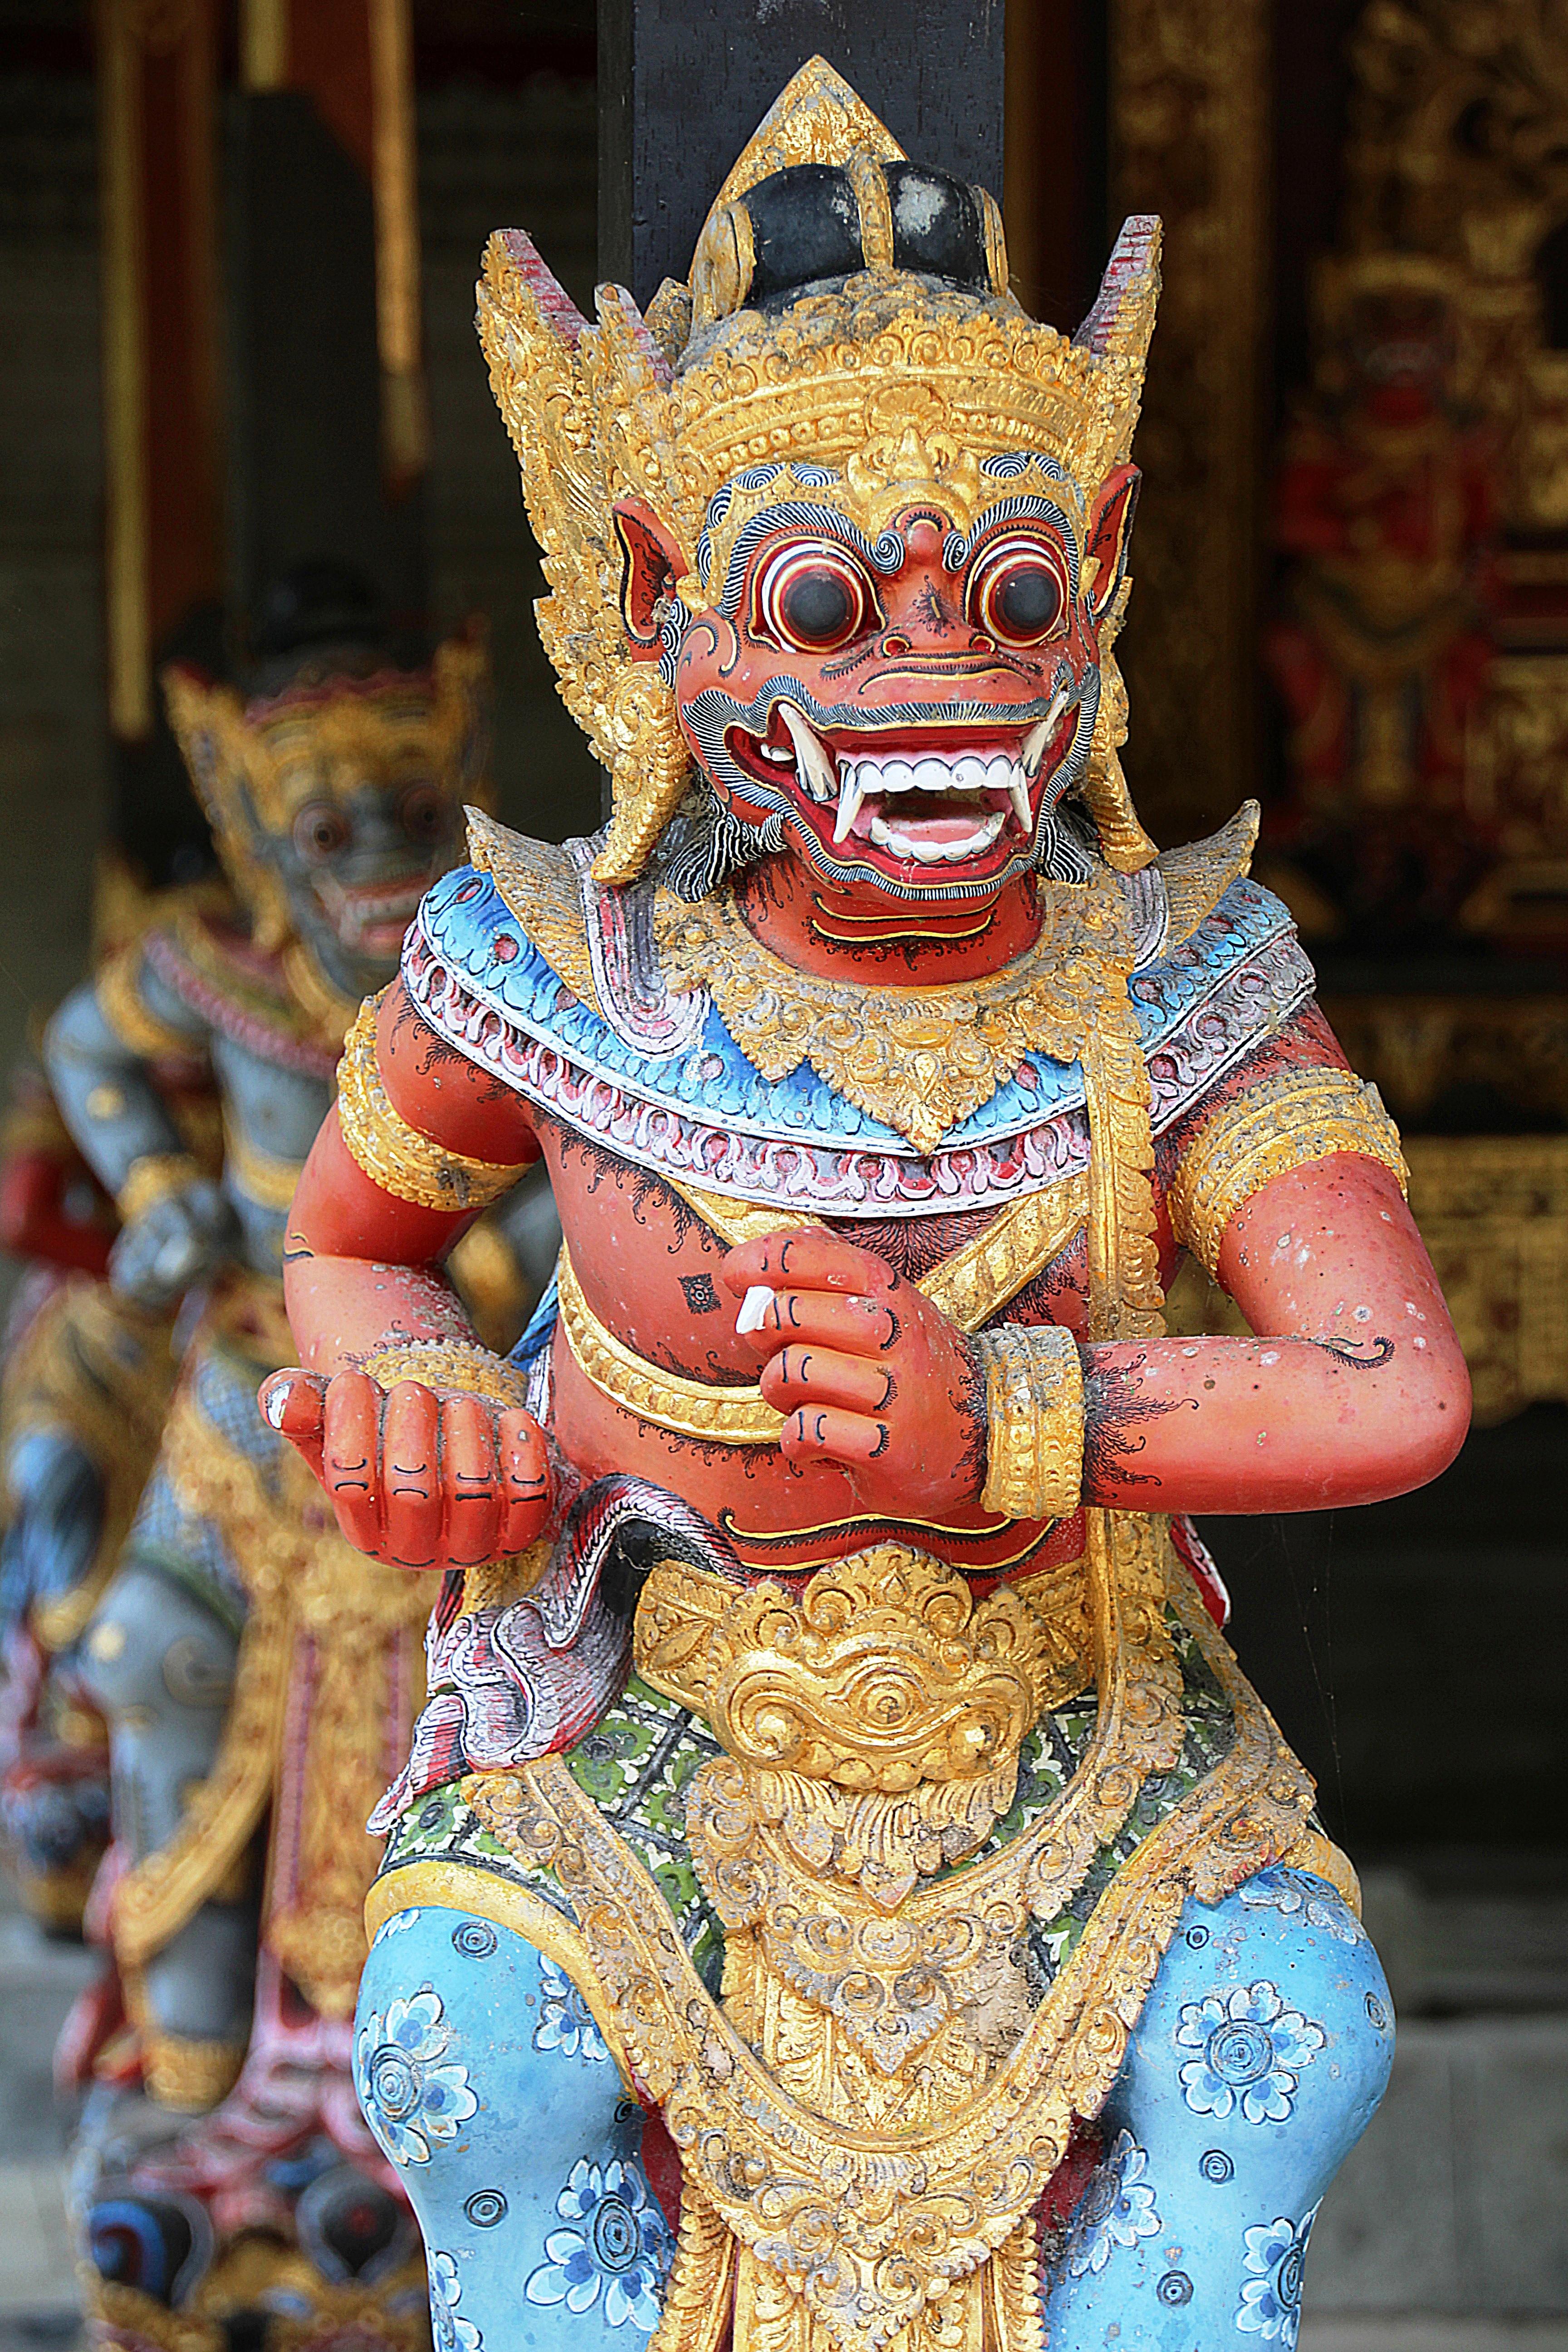 Ceremony, Culture, Image, Bali, statue, religion free image